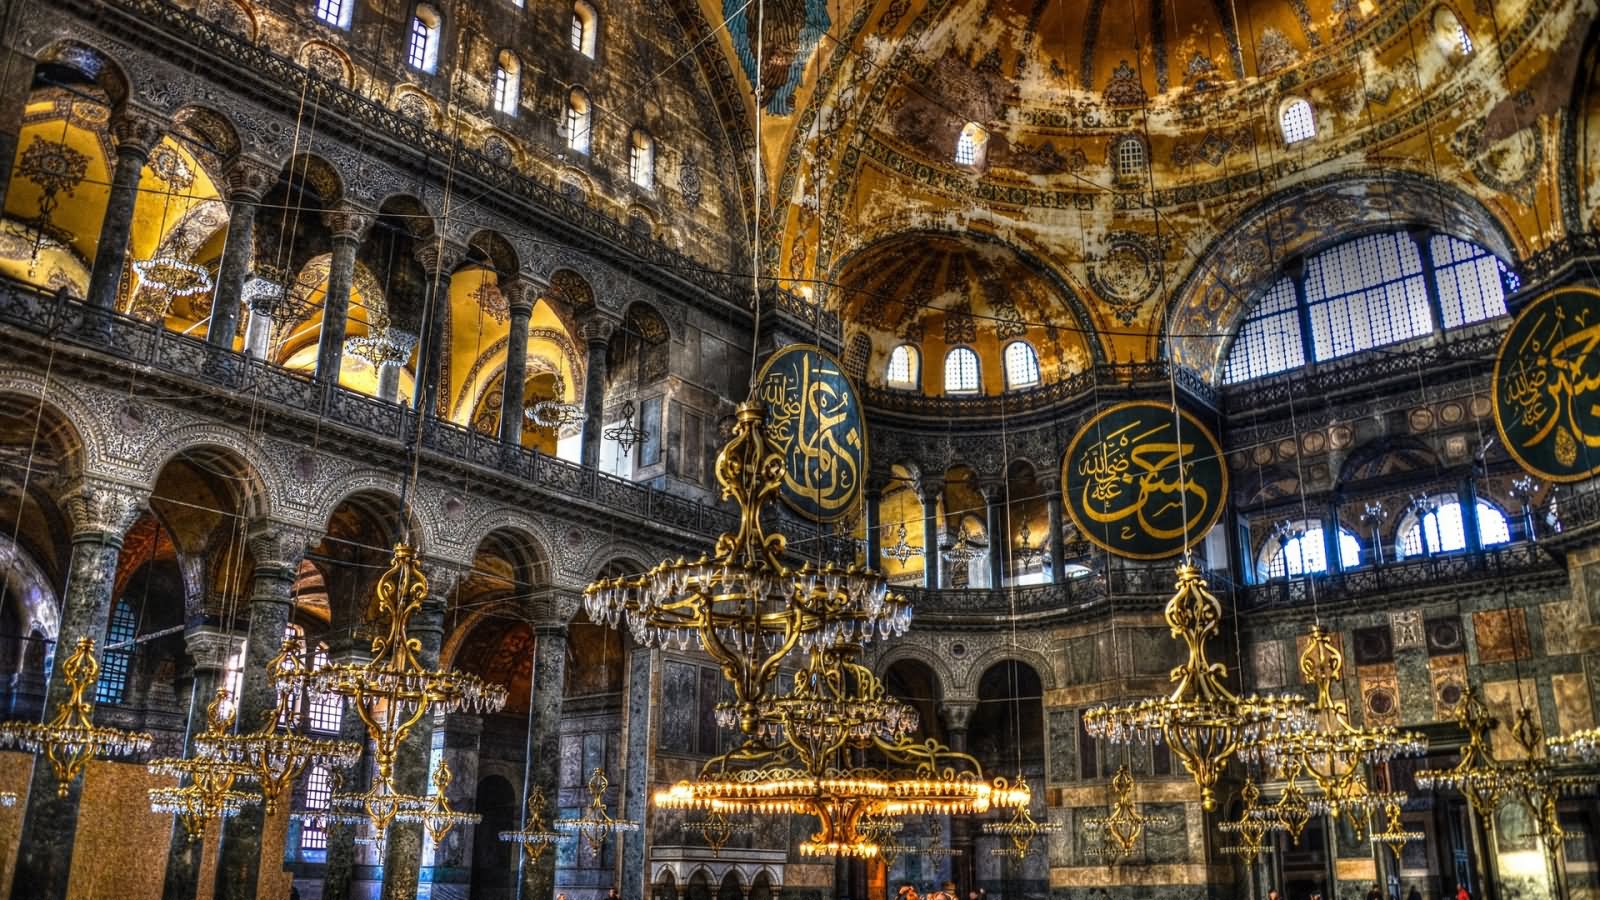 Beautiful-Interior-View-Of-The-Hagia-Sophia-In-Istanbul.jpg